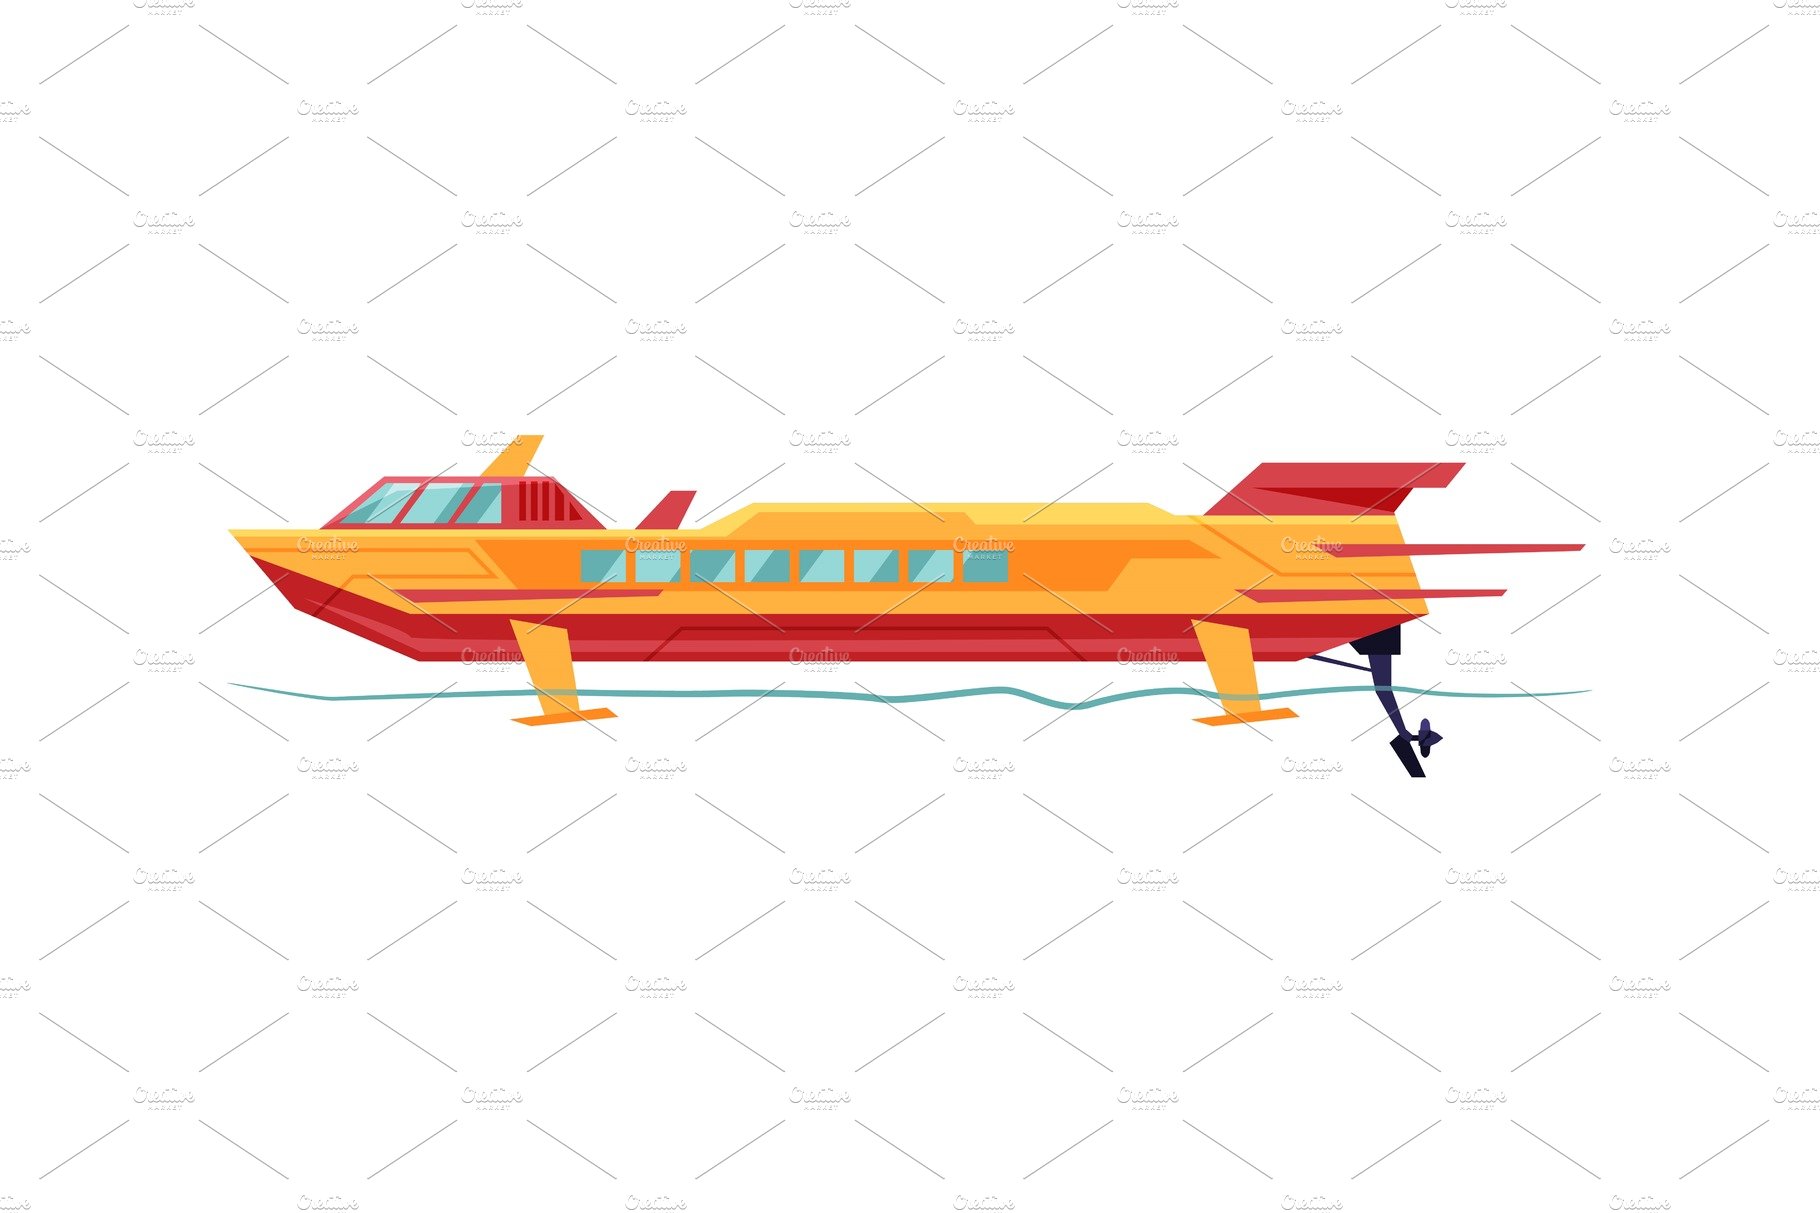 Power Boat or Speedboat, Orange cover image.